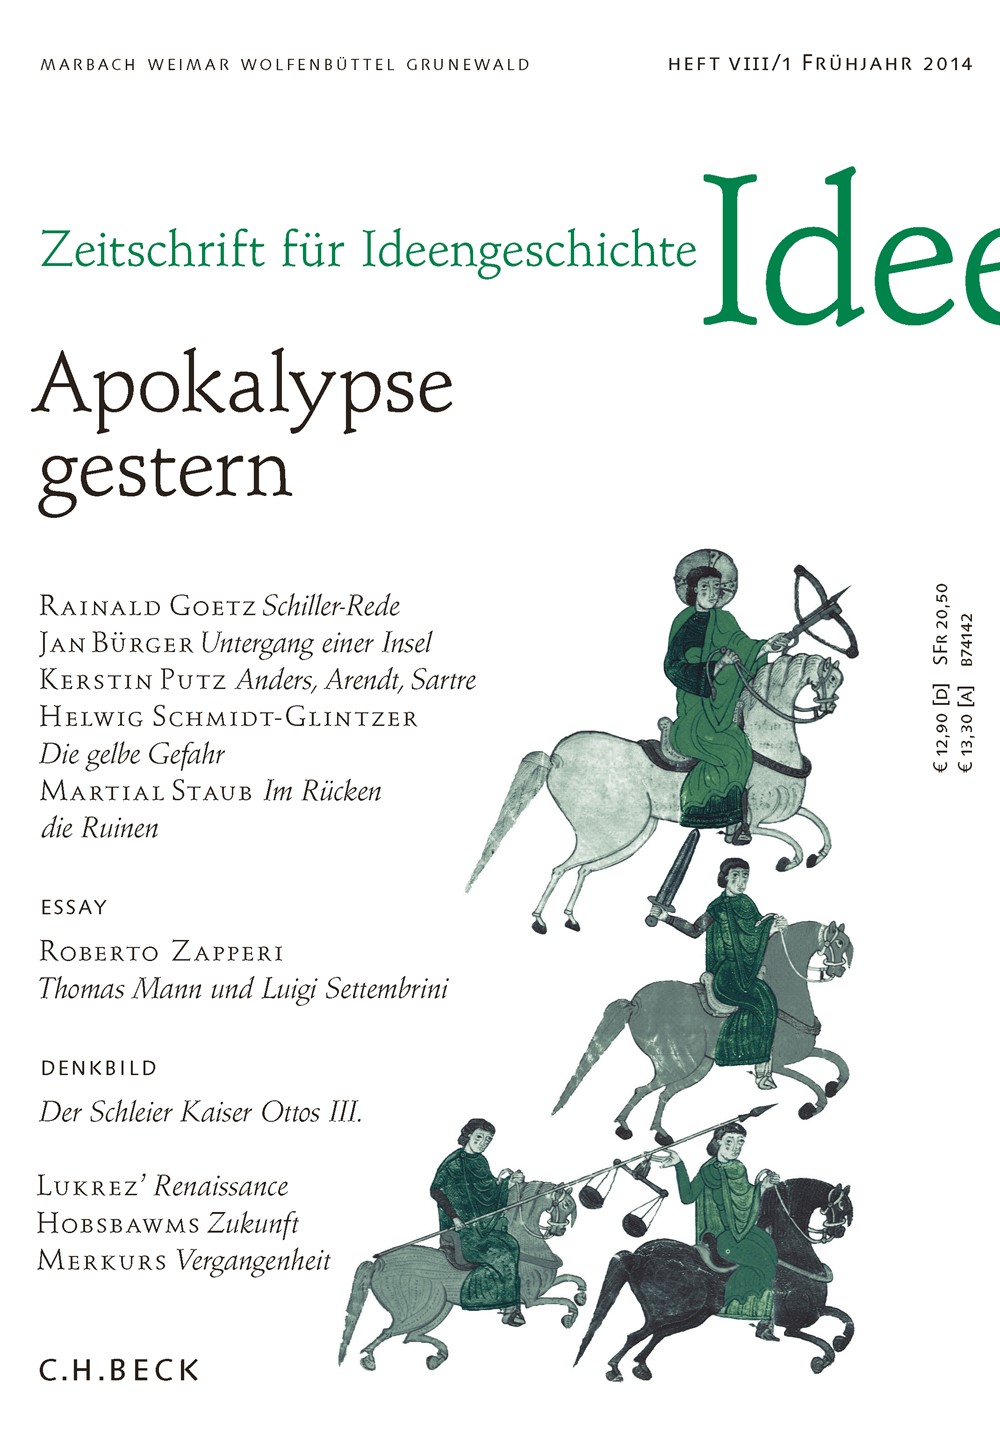 cover of Heft VIII/1 Frühjahr 2014